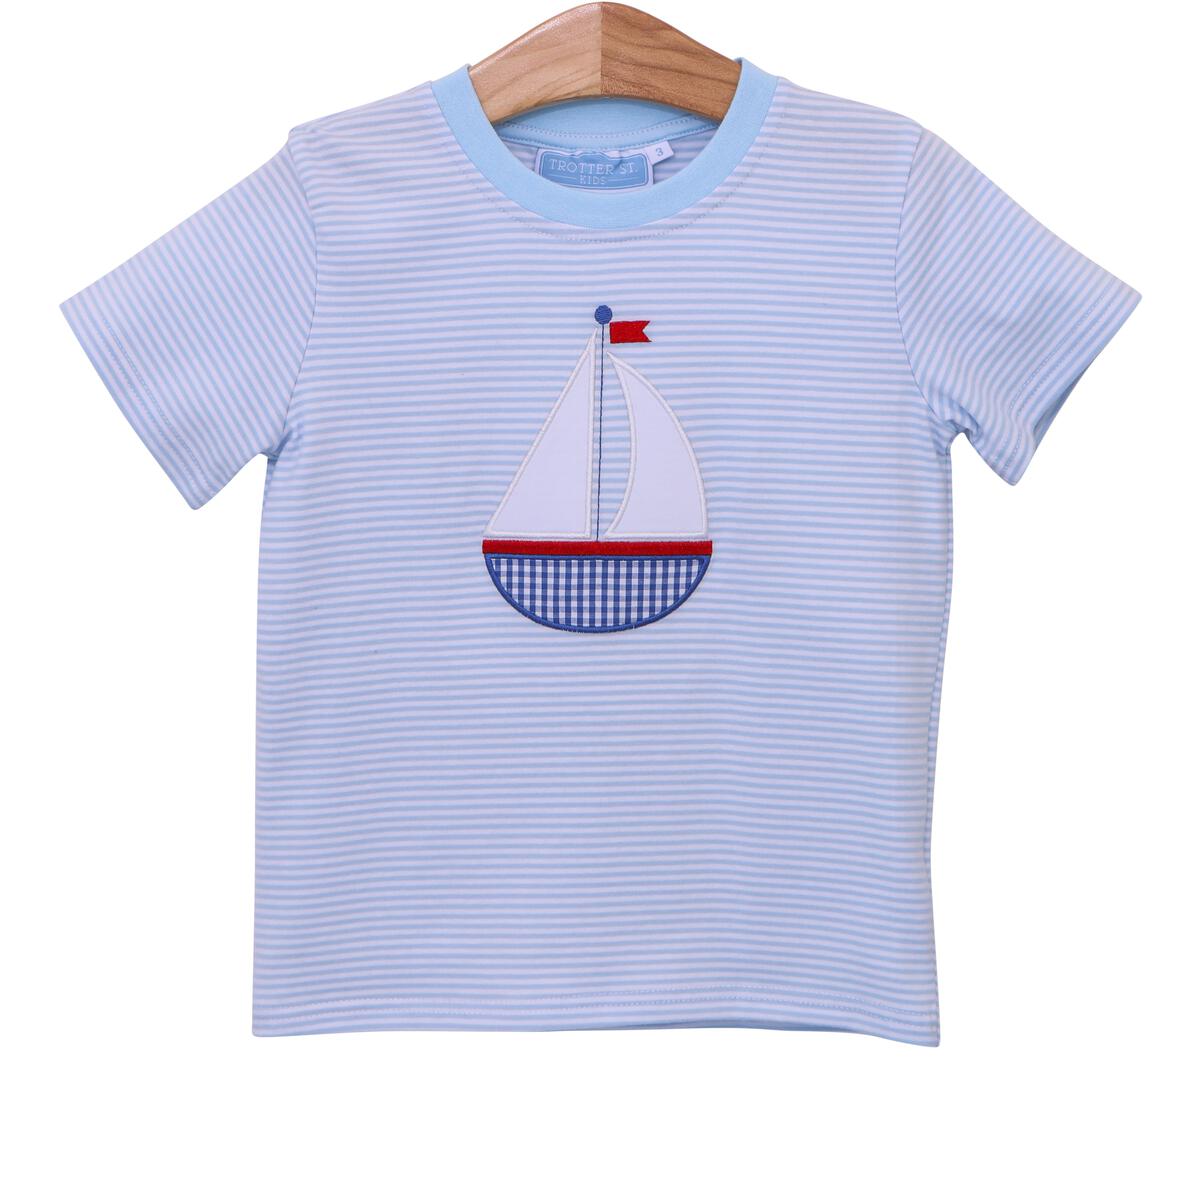 Sailboat Stripe Knit Shirt